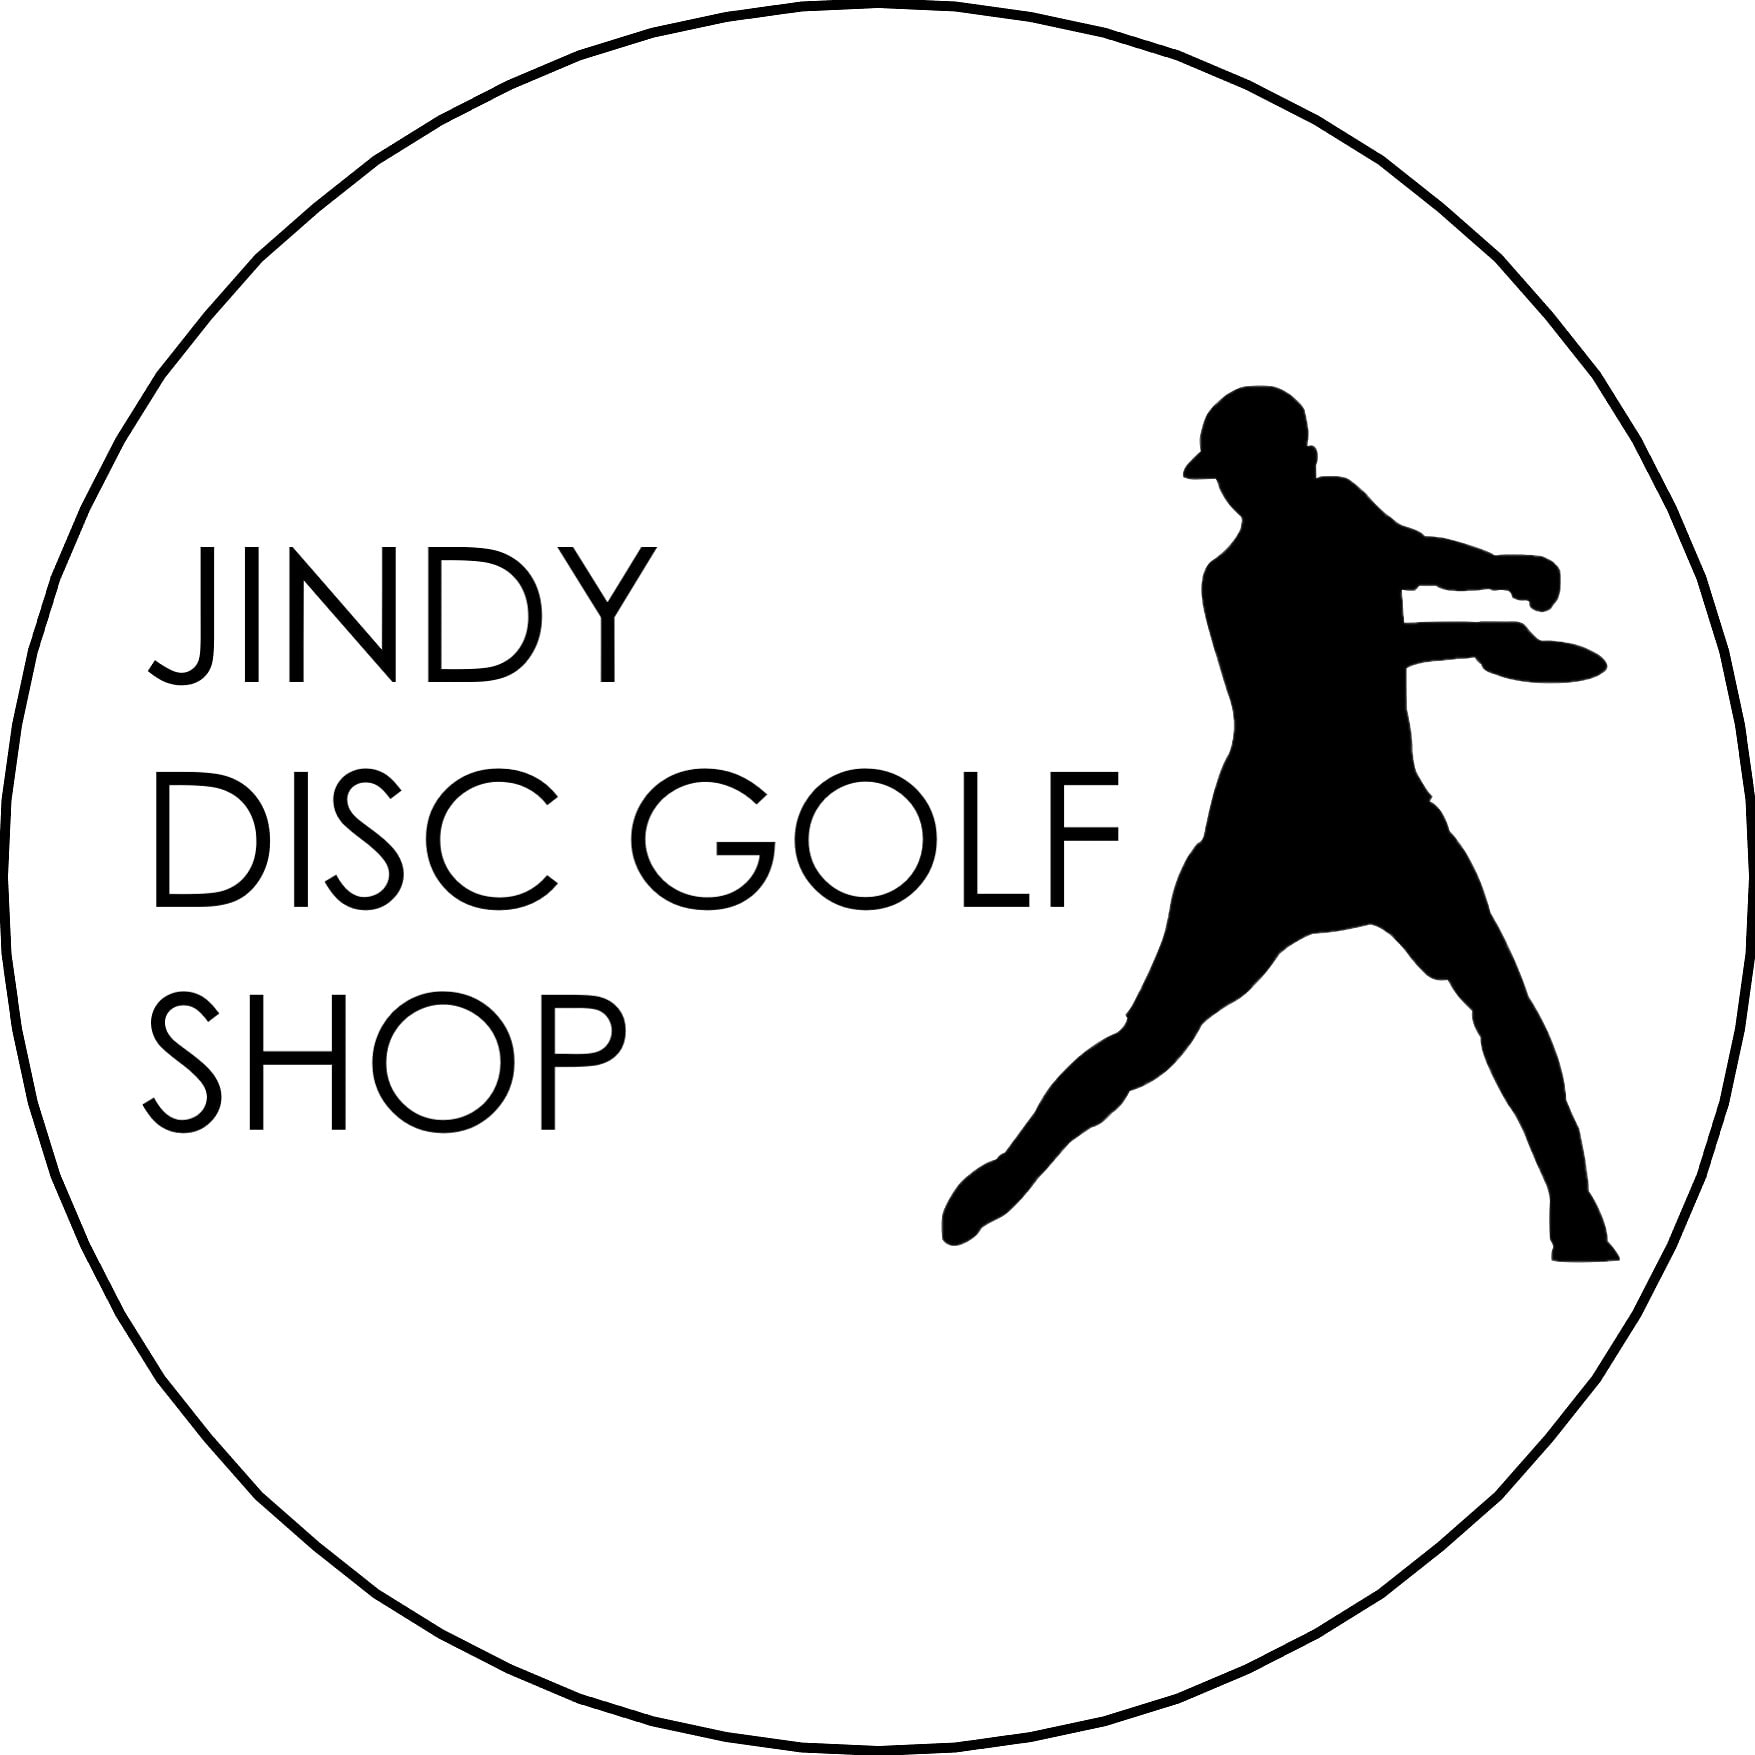 Jindy Disc Golf Shop logo